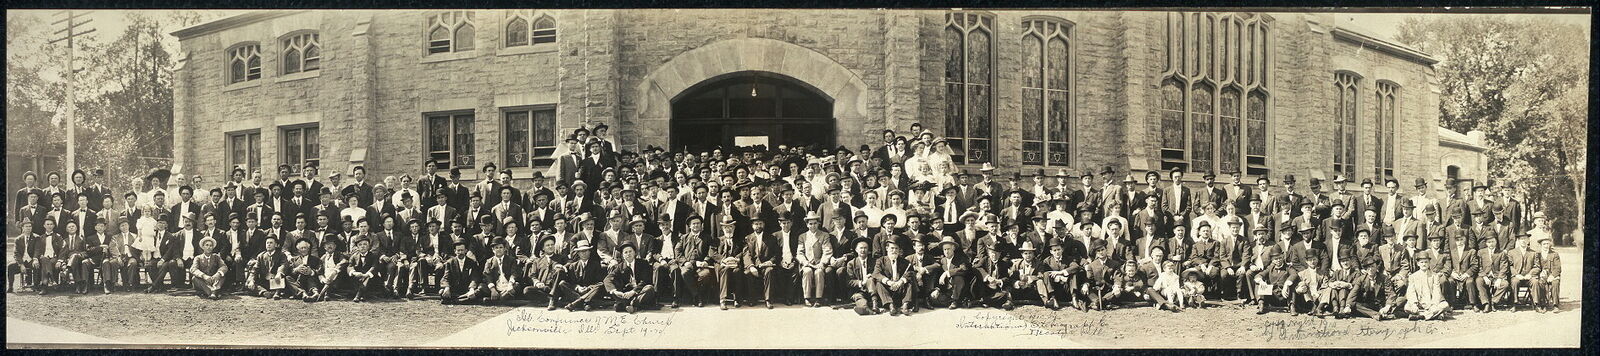 1910 Panoramic: Illinois Conference of M.E. Church,Jacksonville,Illinois